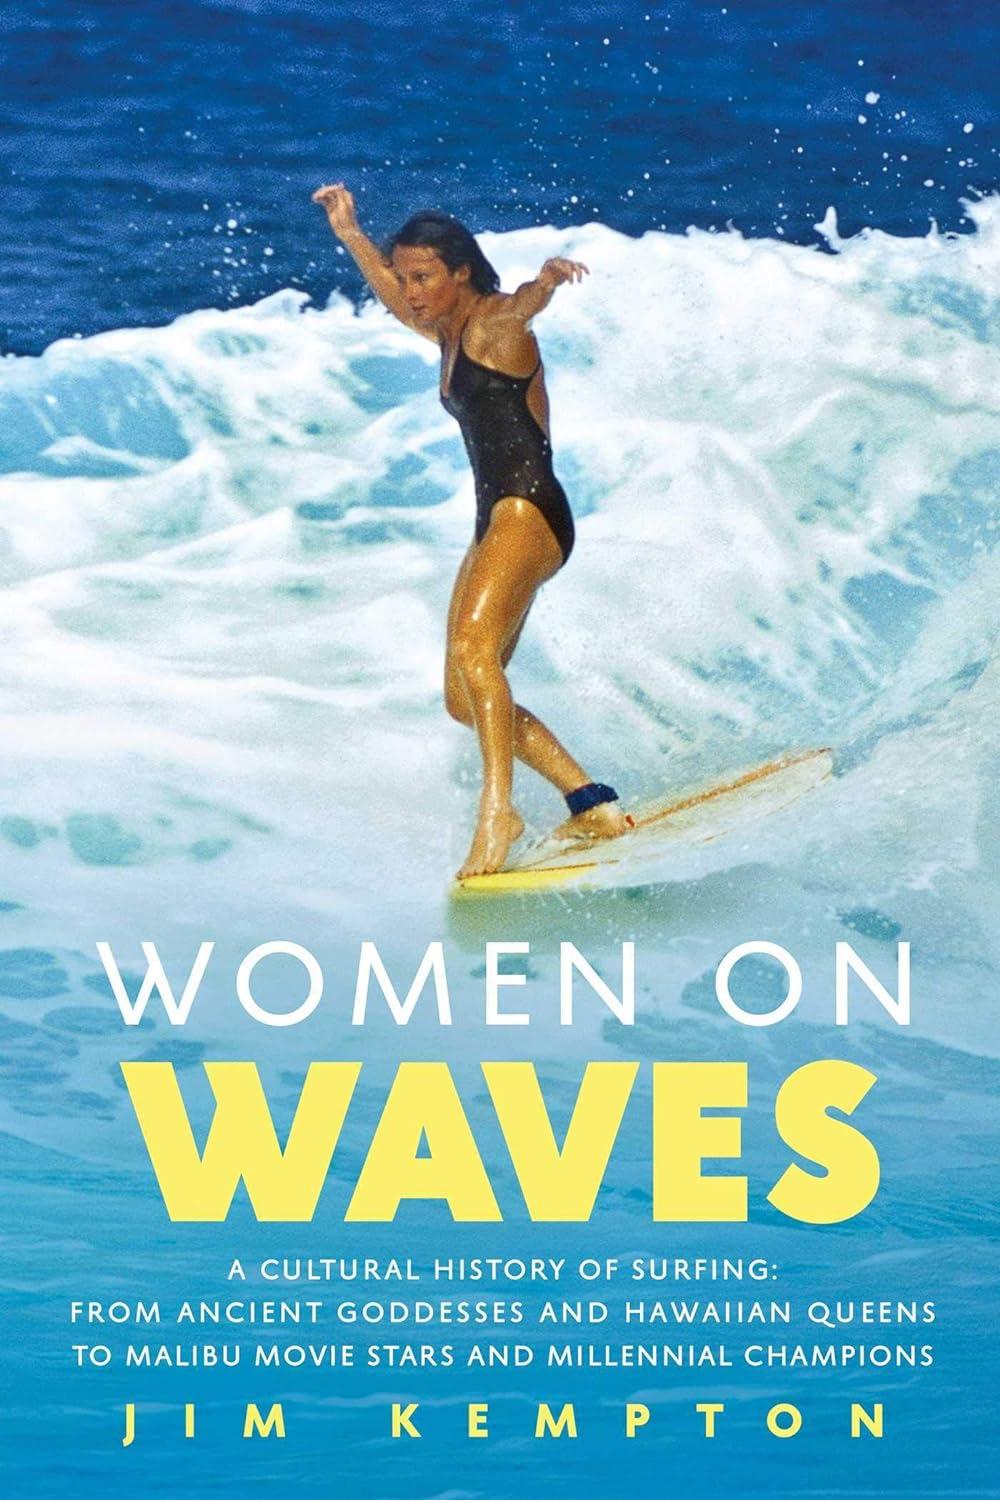 Women of Waves by Jim Kempton